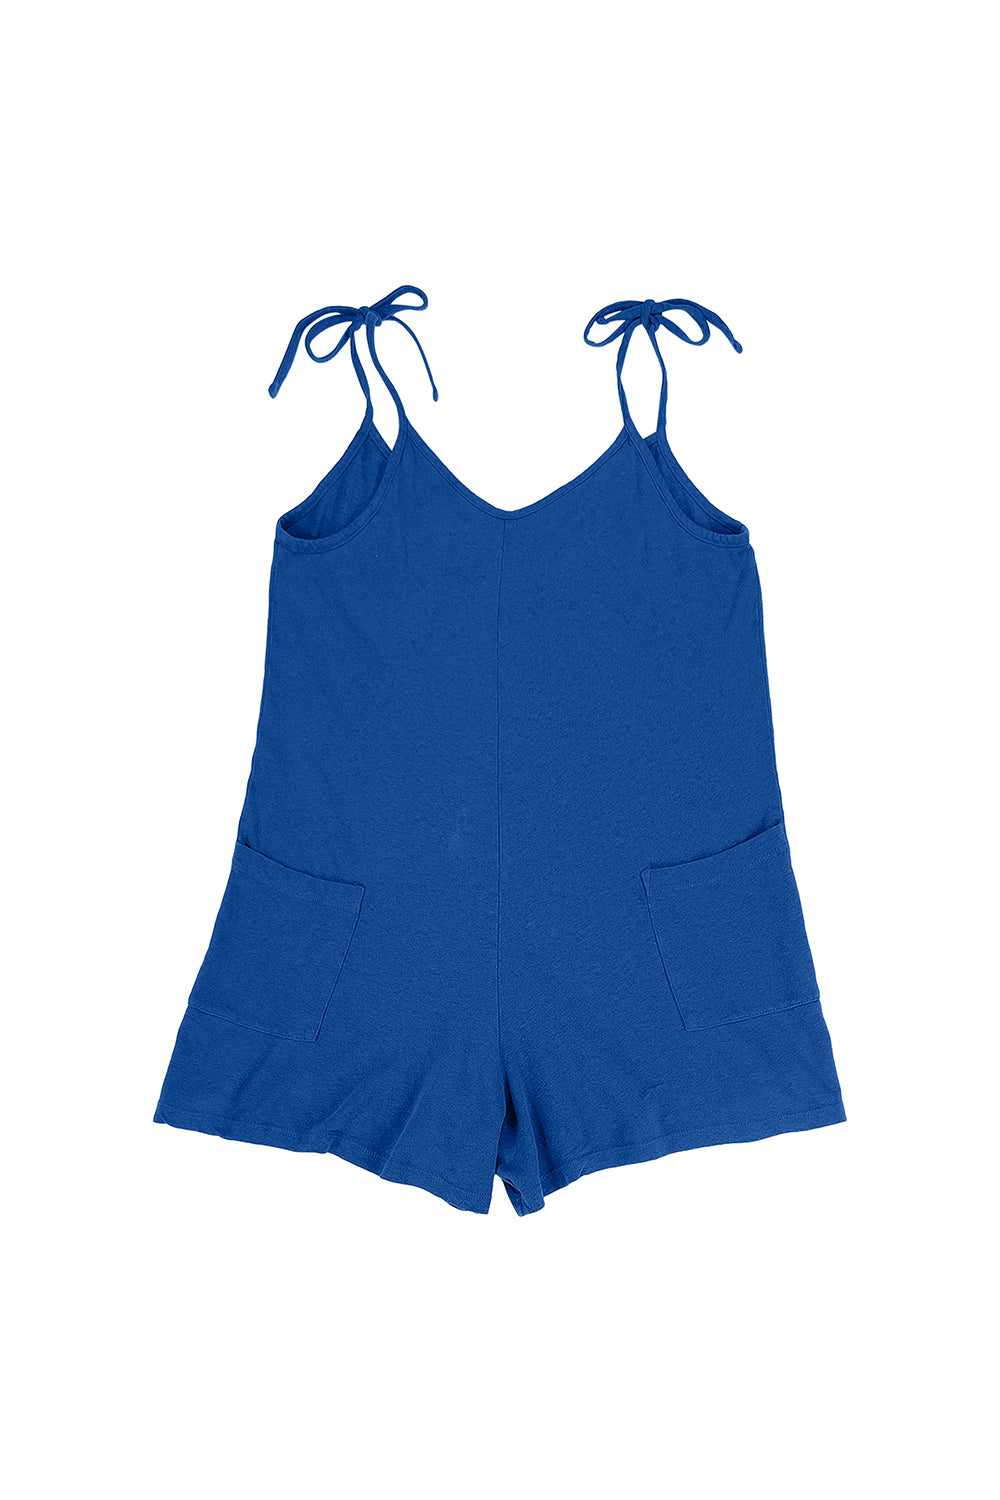 Sespe Short | Jungmaven Hemp Clothing & Accessories / Color: Galaxy Blue